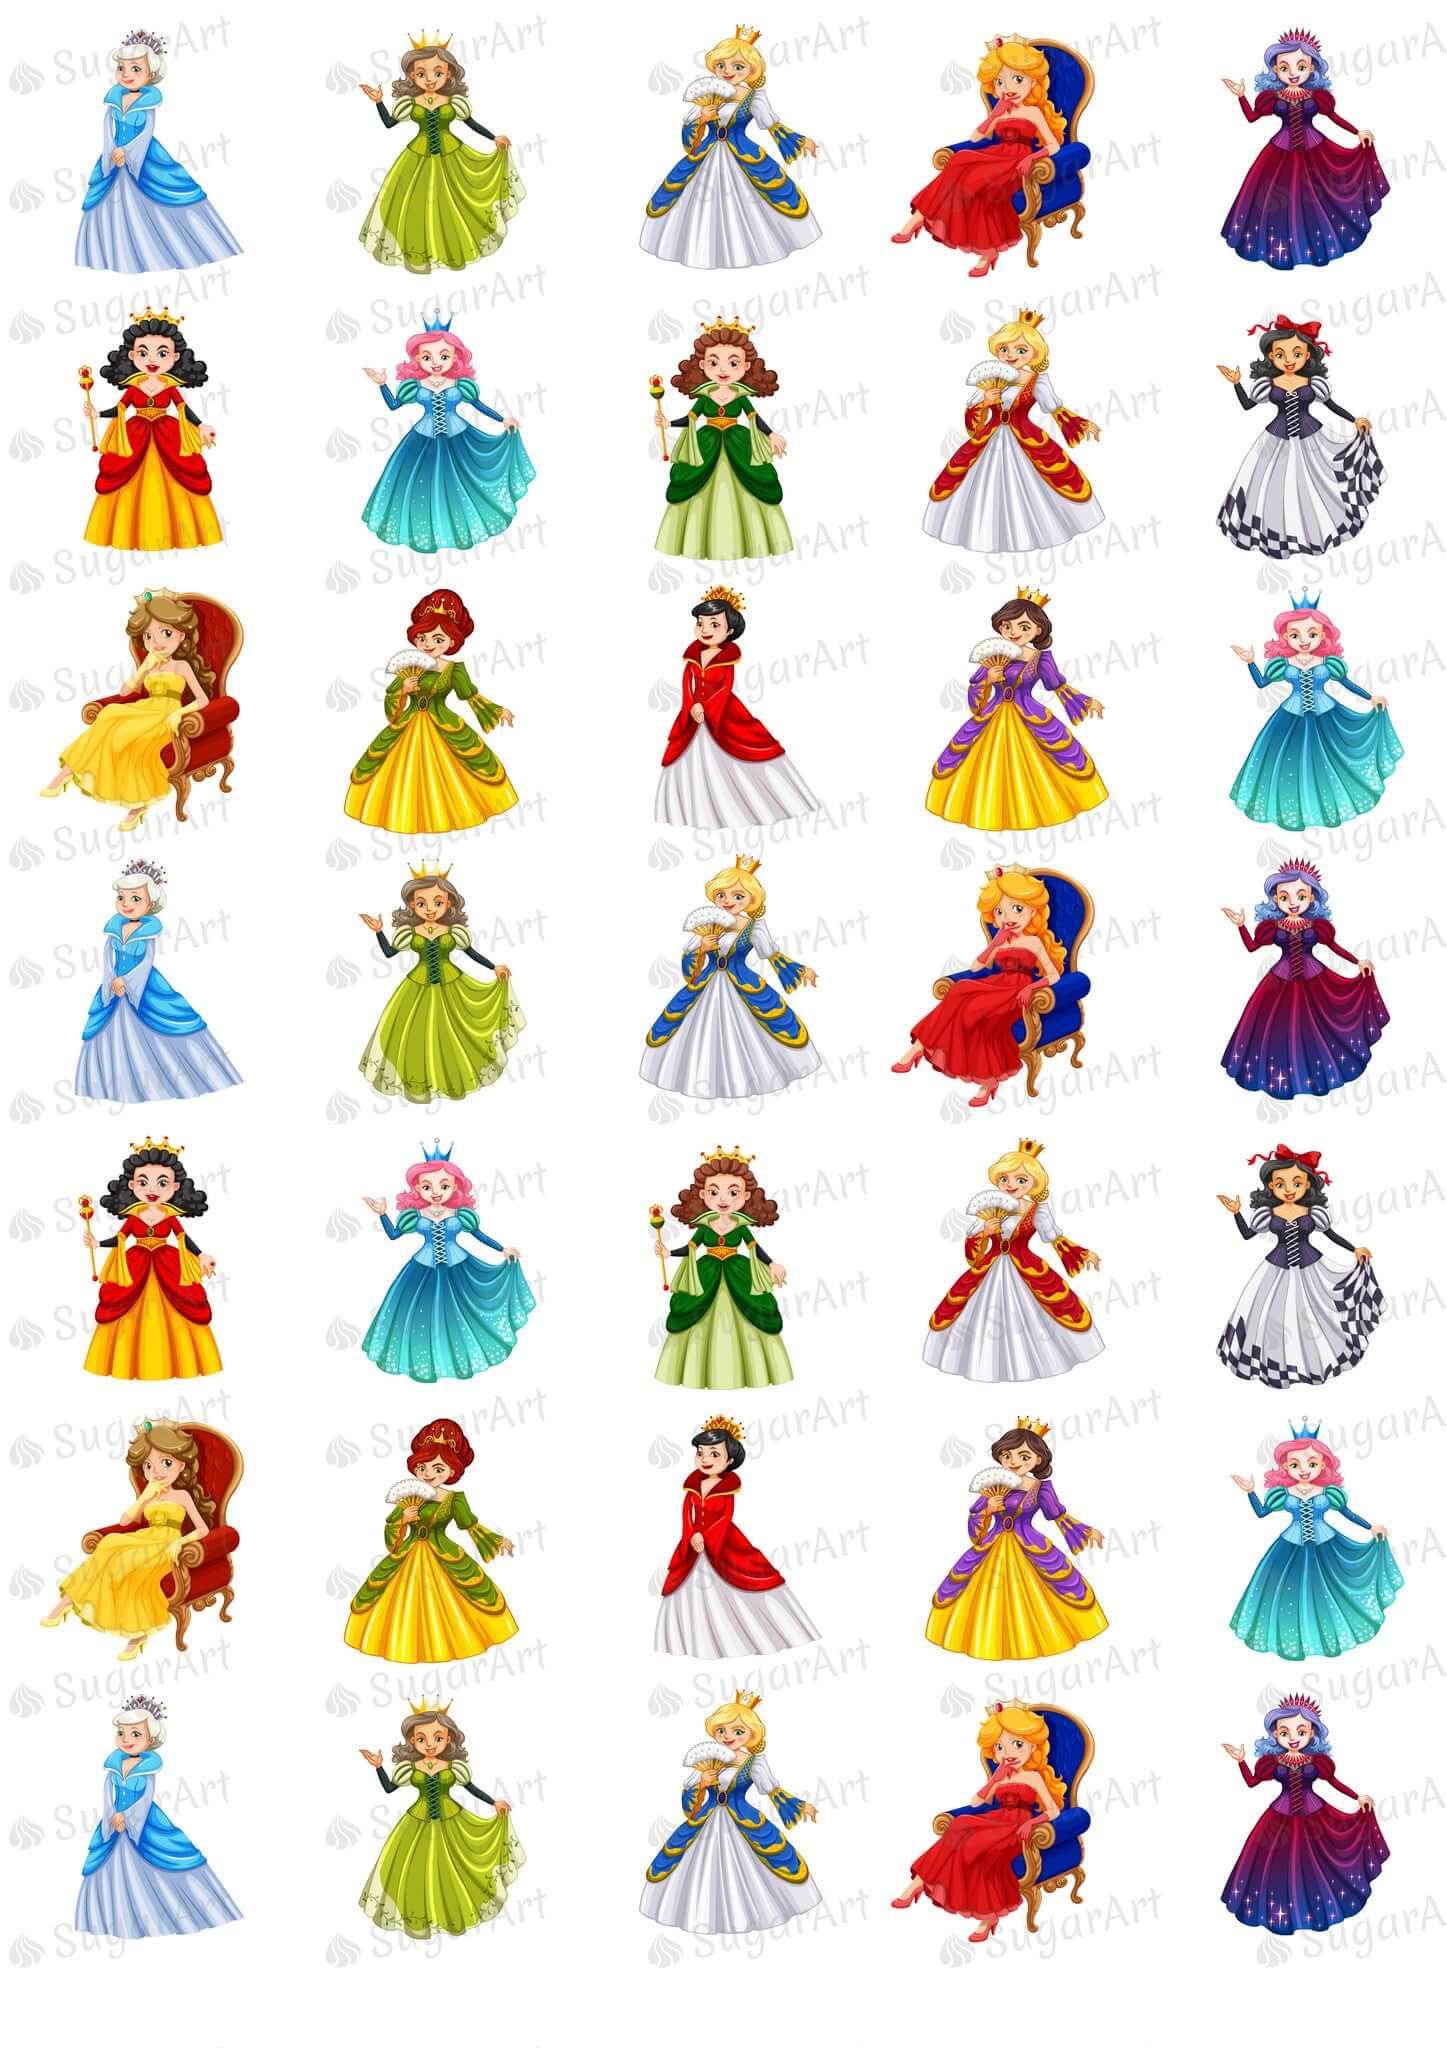 Princesses of Fairy Tales - ESA014-Sugar Stamp sheets-Sugar Art